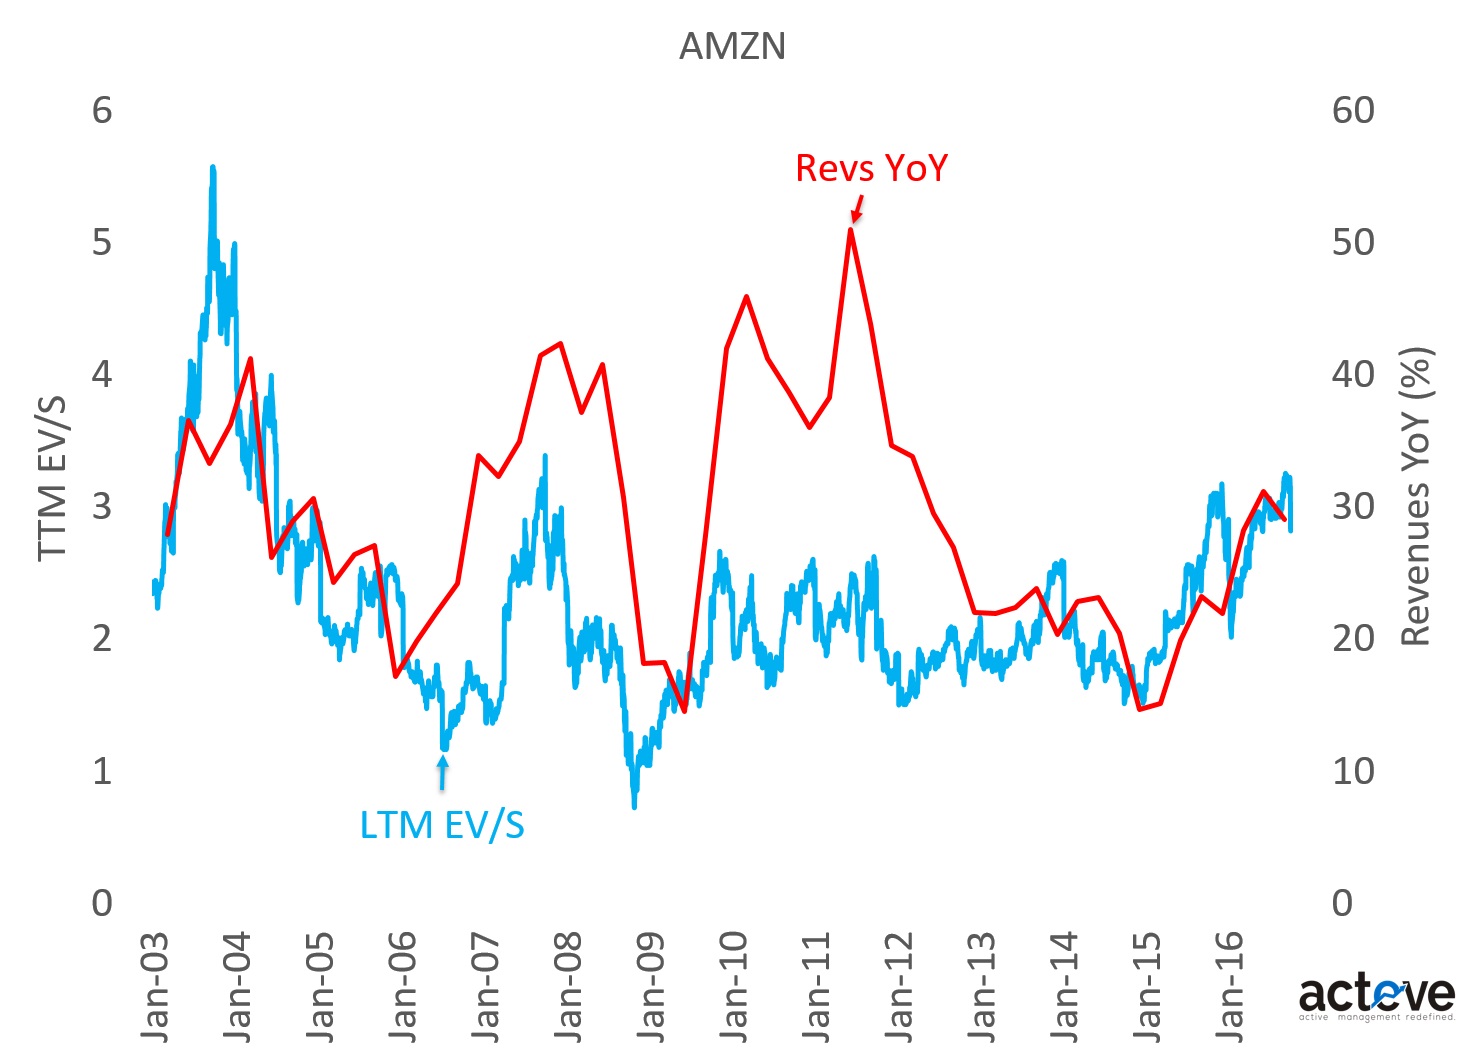 AMZN EV/S vs. YoY Revenues